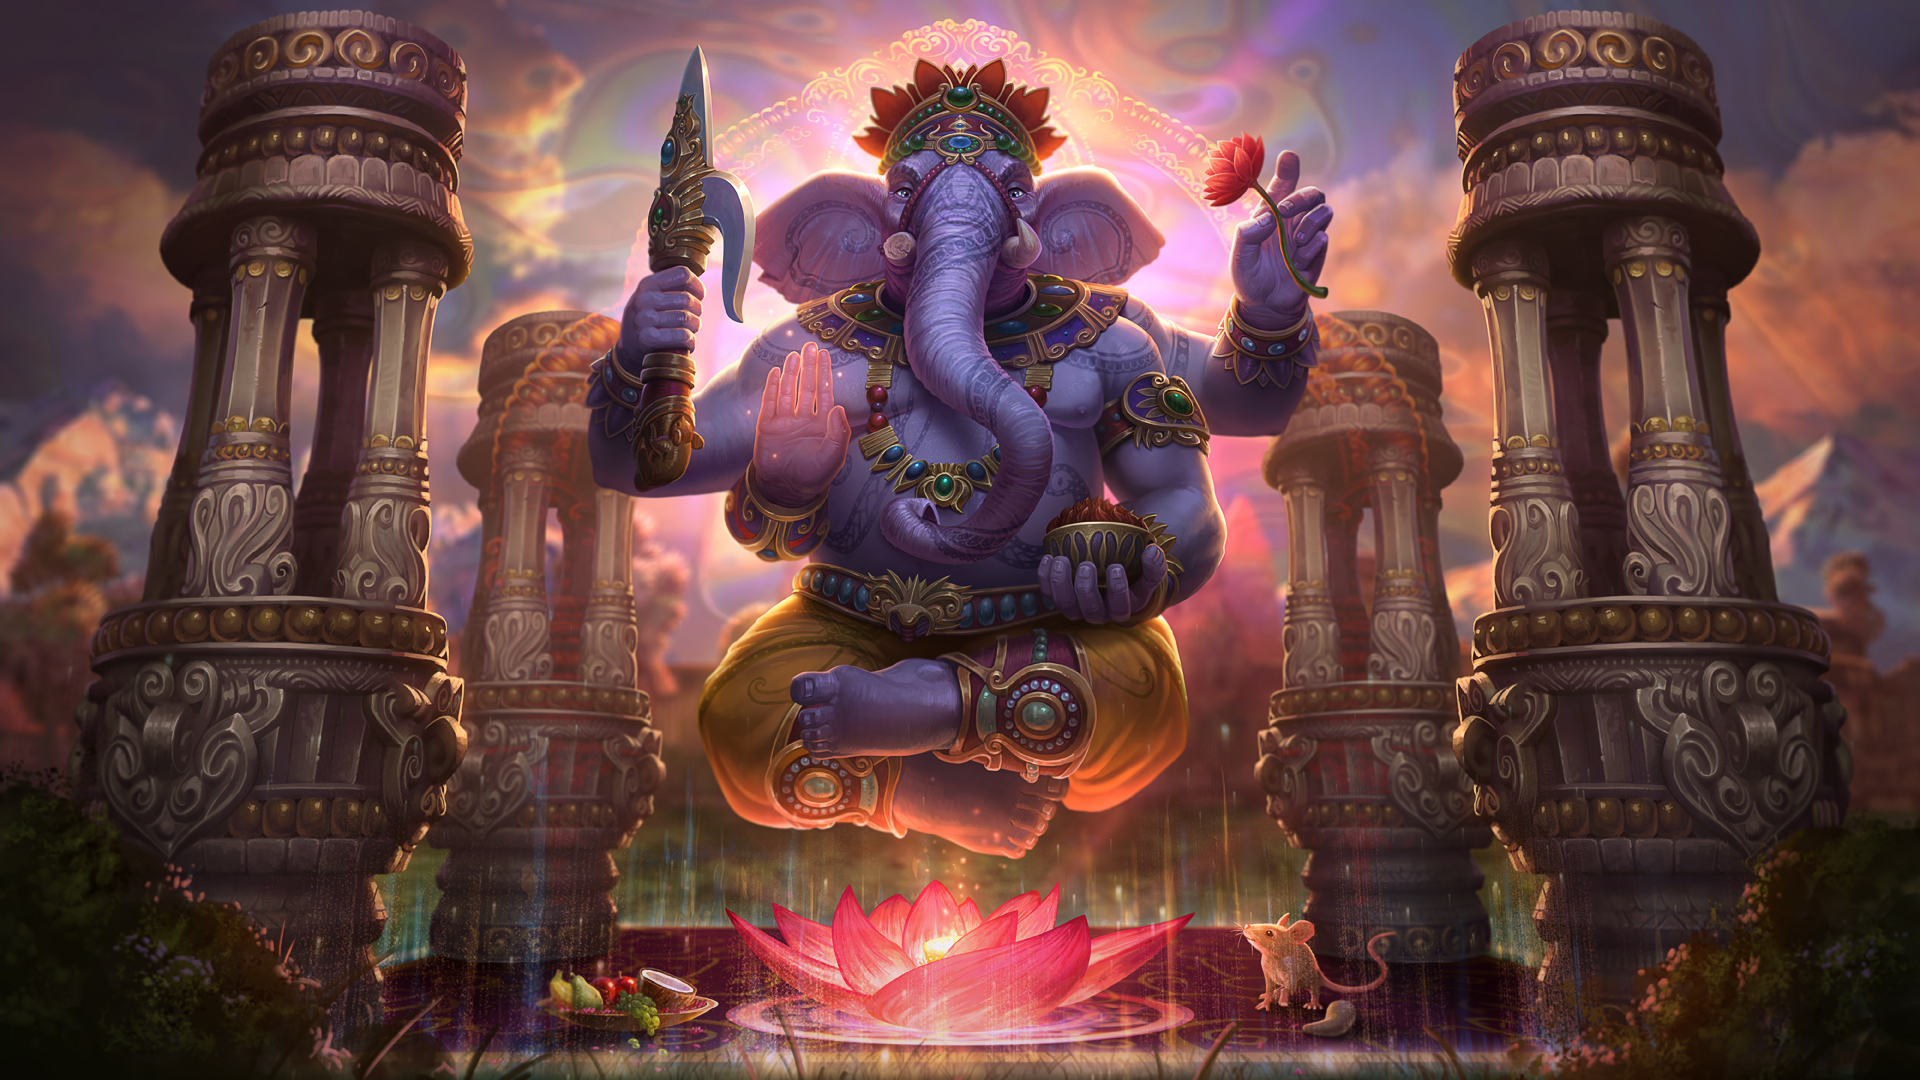 General 1920x1080 religion gods Ganesh elephant lotus flowers Jon Neimeister